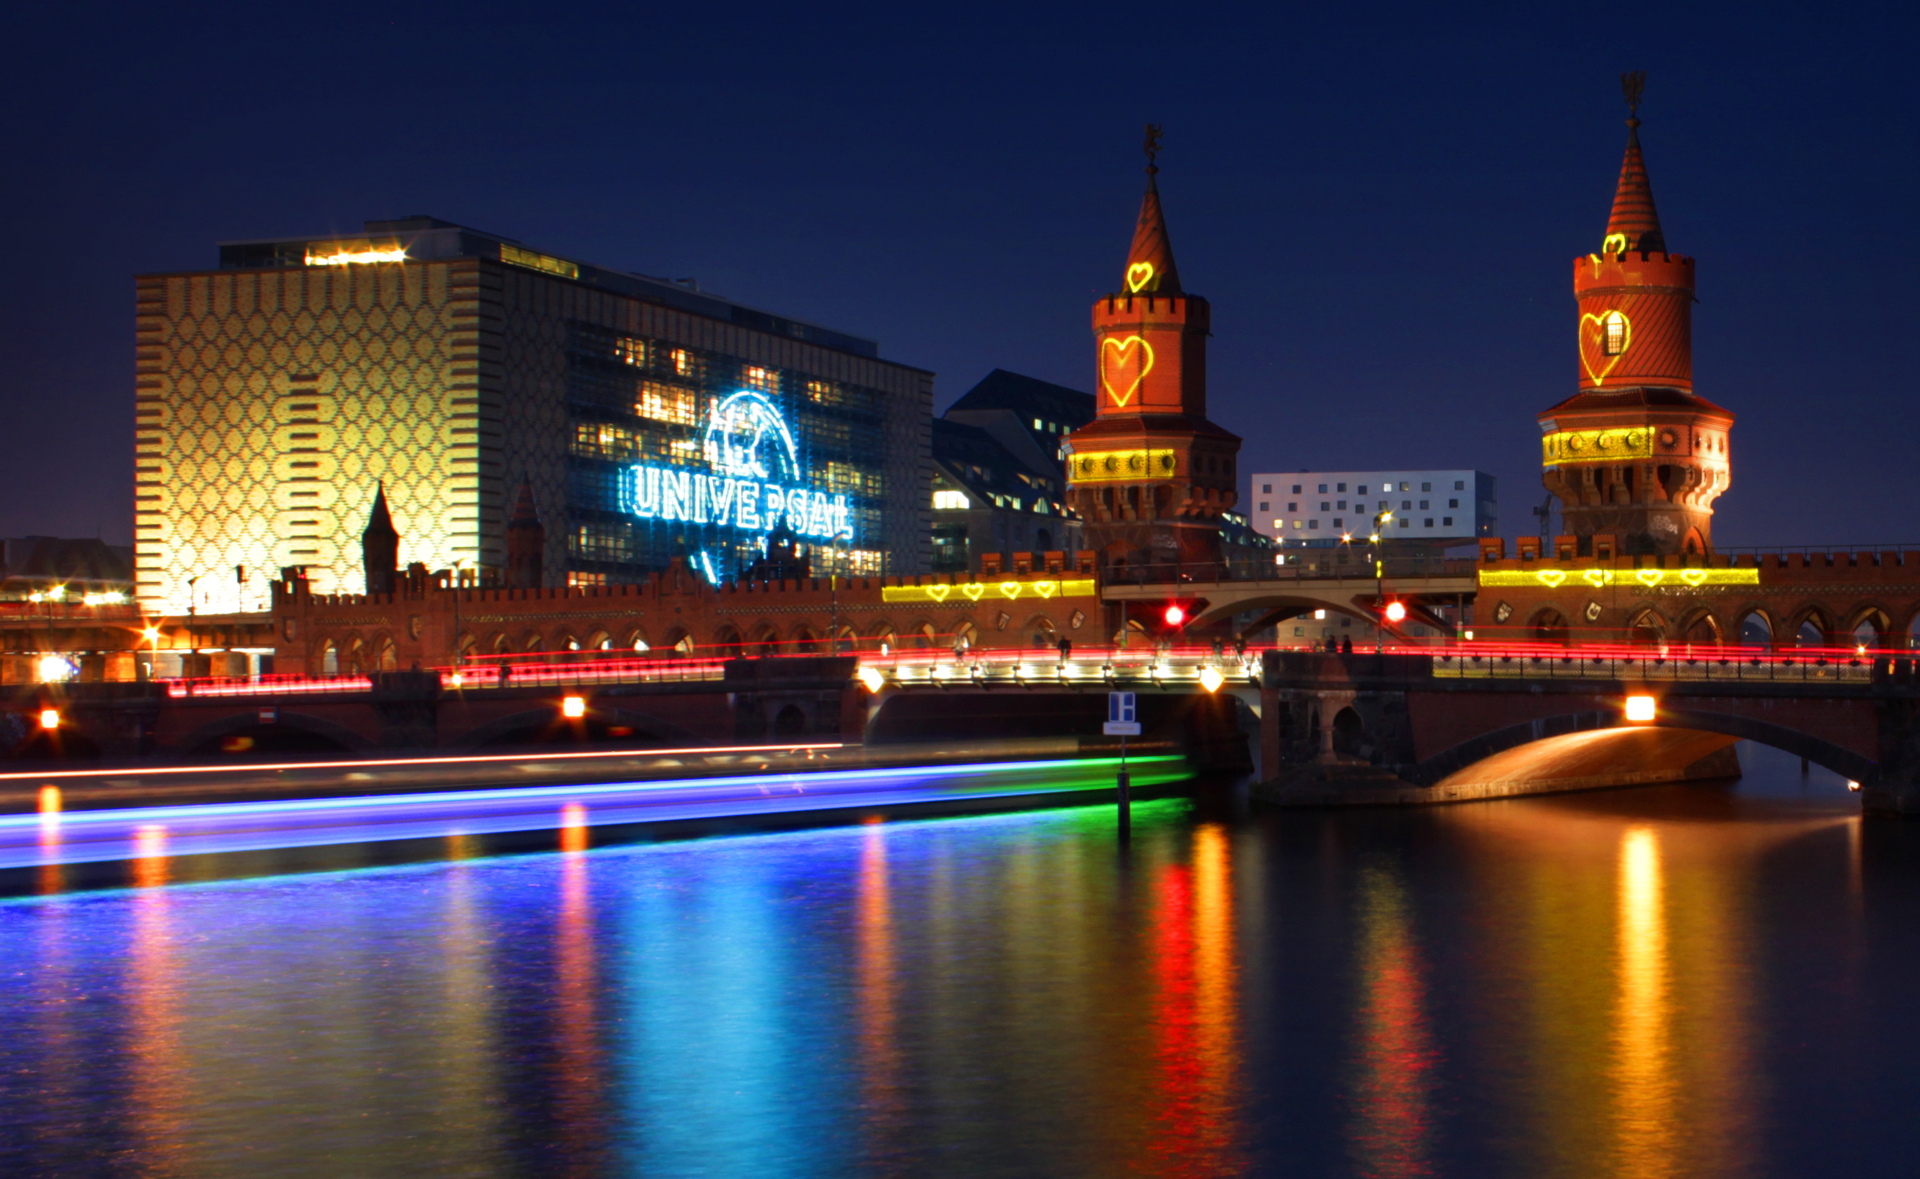 Berlin leuchtet Light is moving all Berliners | Livegreenblog